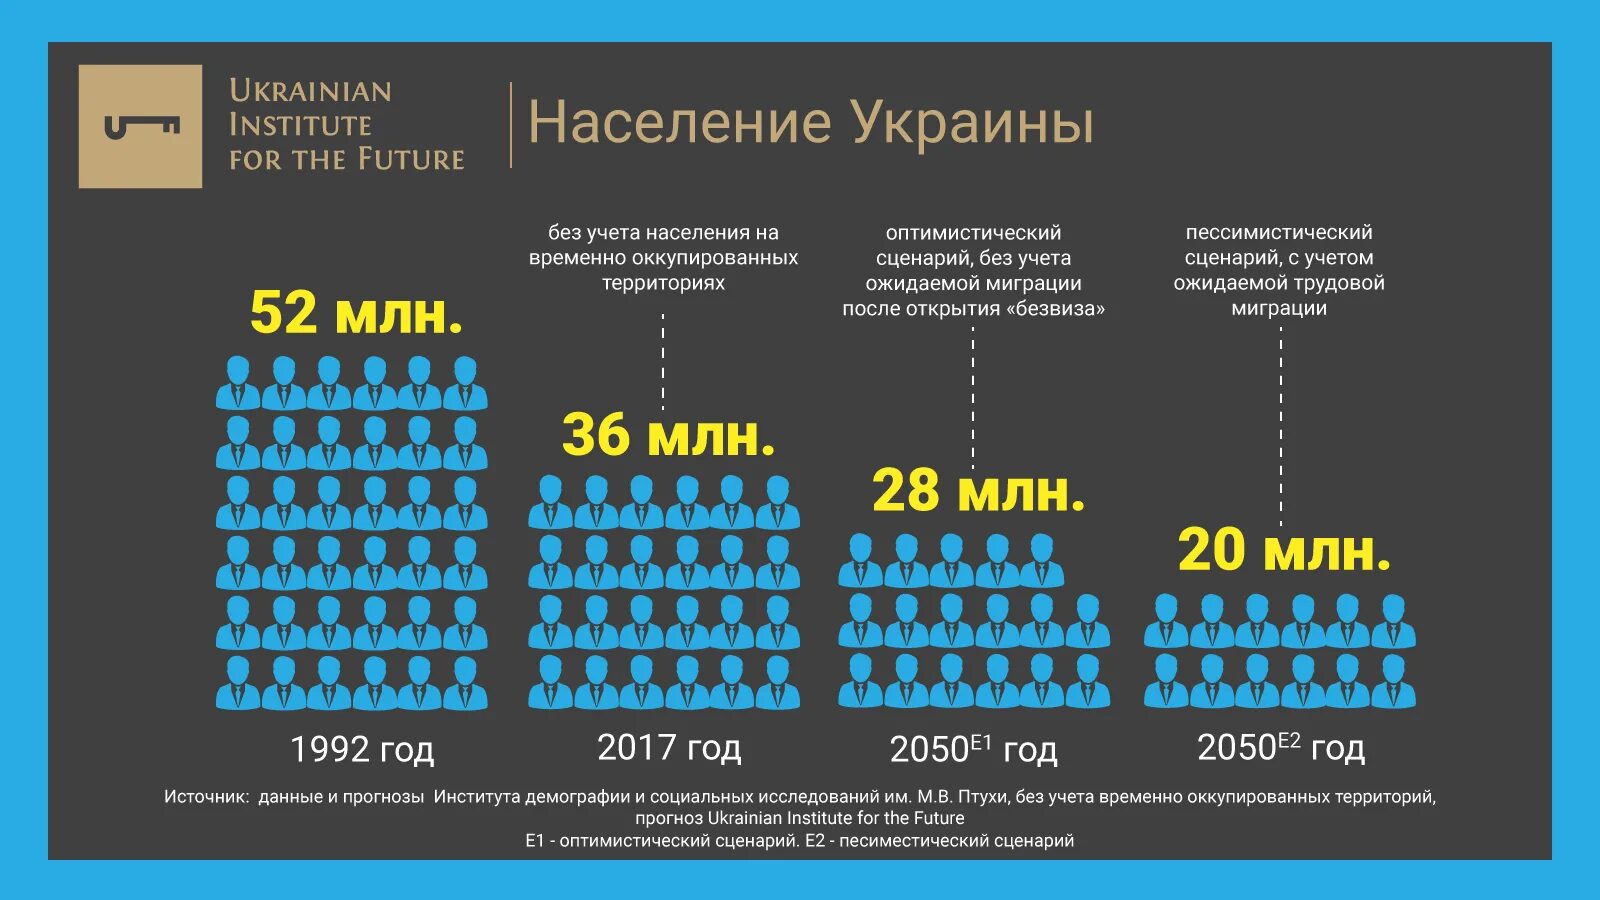 Население киева 2023 численность. Численность населения Украины на 2021. Население Украины на 2021 численность без Крыма. Население Украины без Крыма и Донбасса численность. Численность населения Украины на 2020.